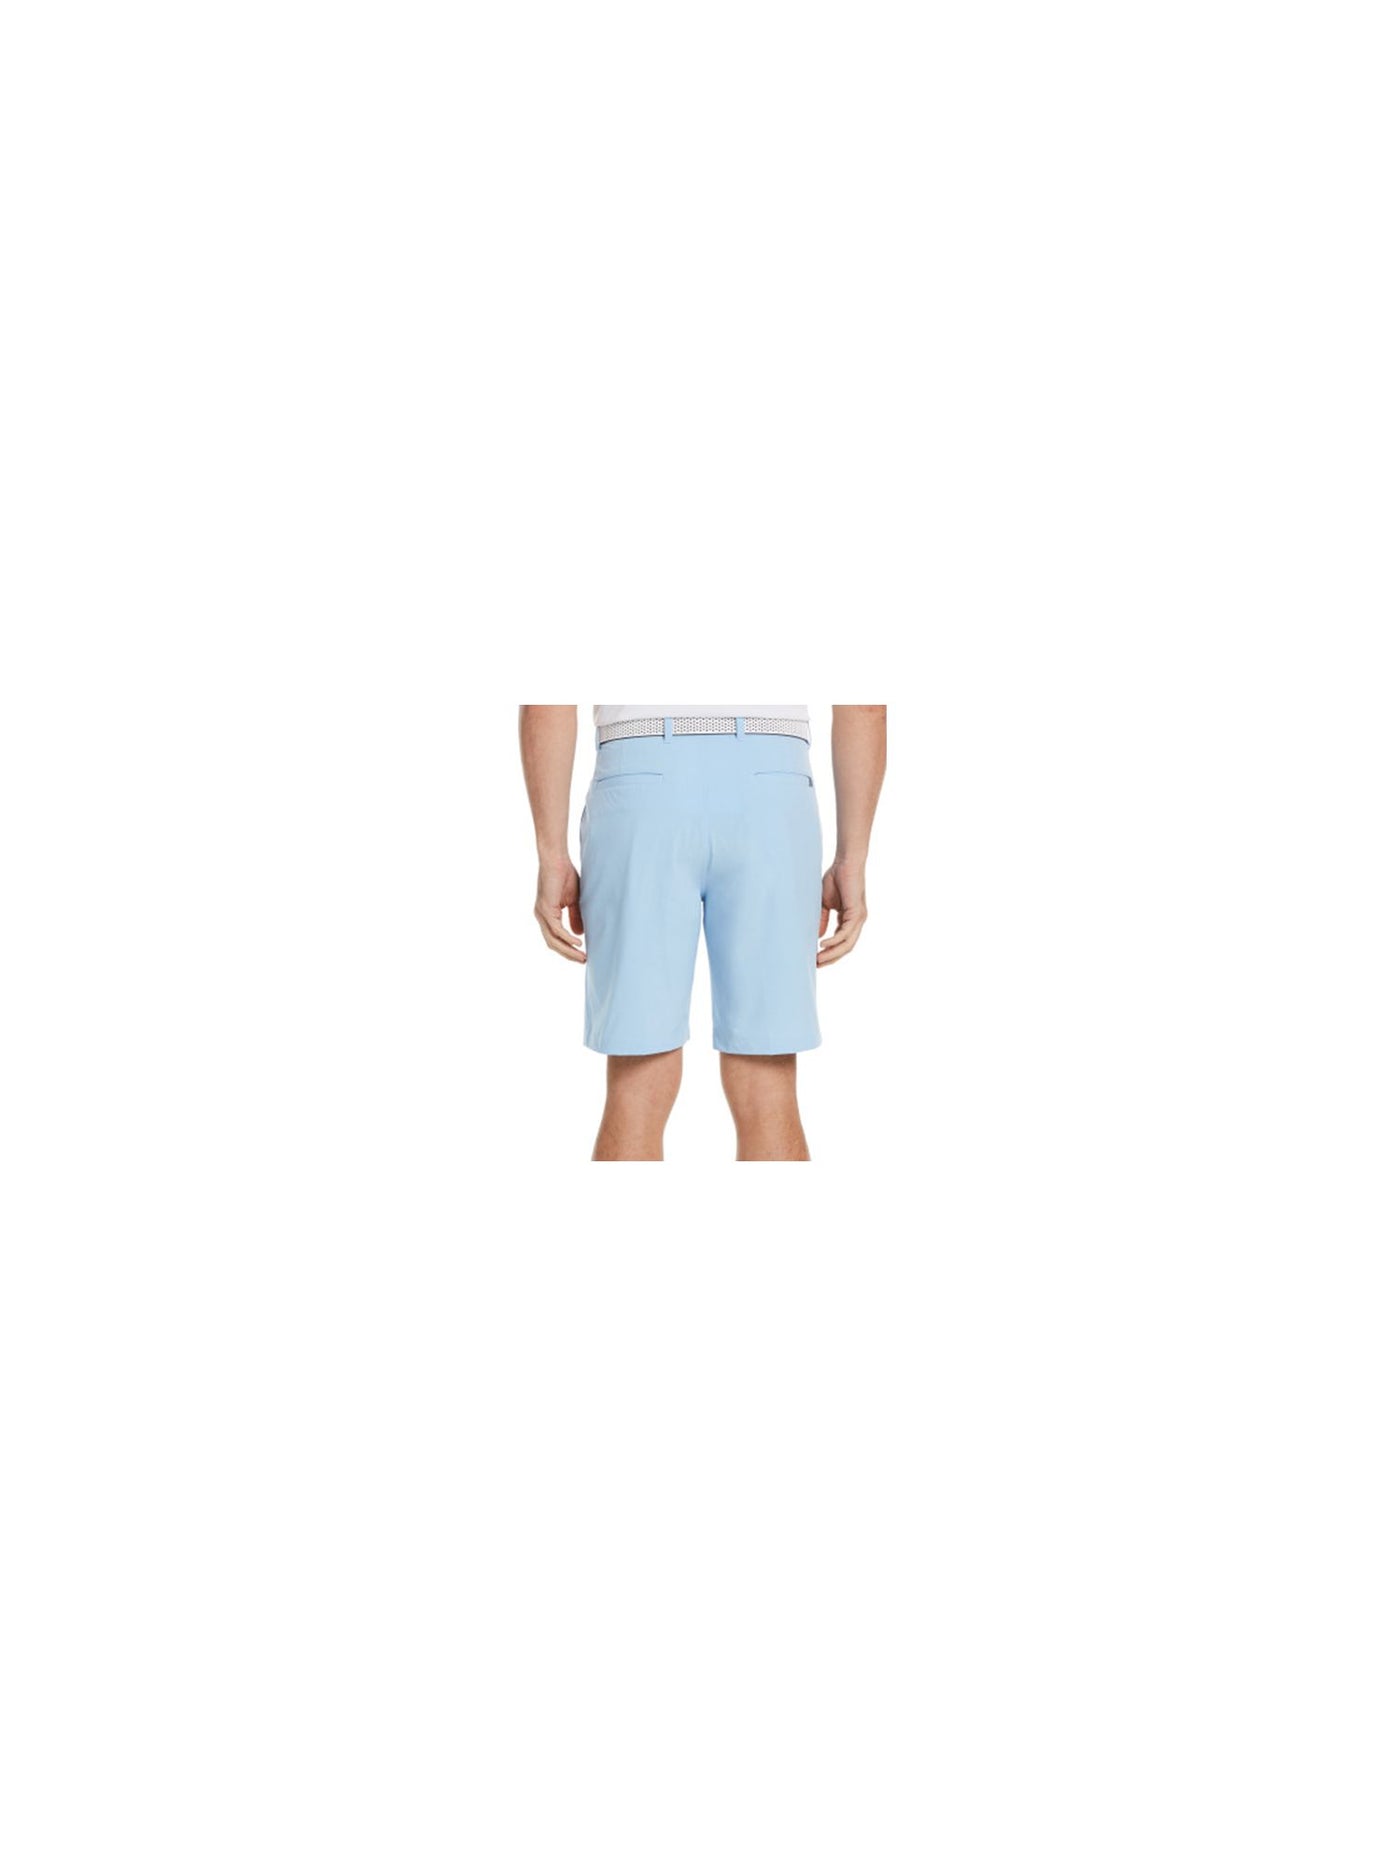 HYBRID APPAREL Mens Light Blue Flat Front, Moisture Wicking Athletic Shorts 40